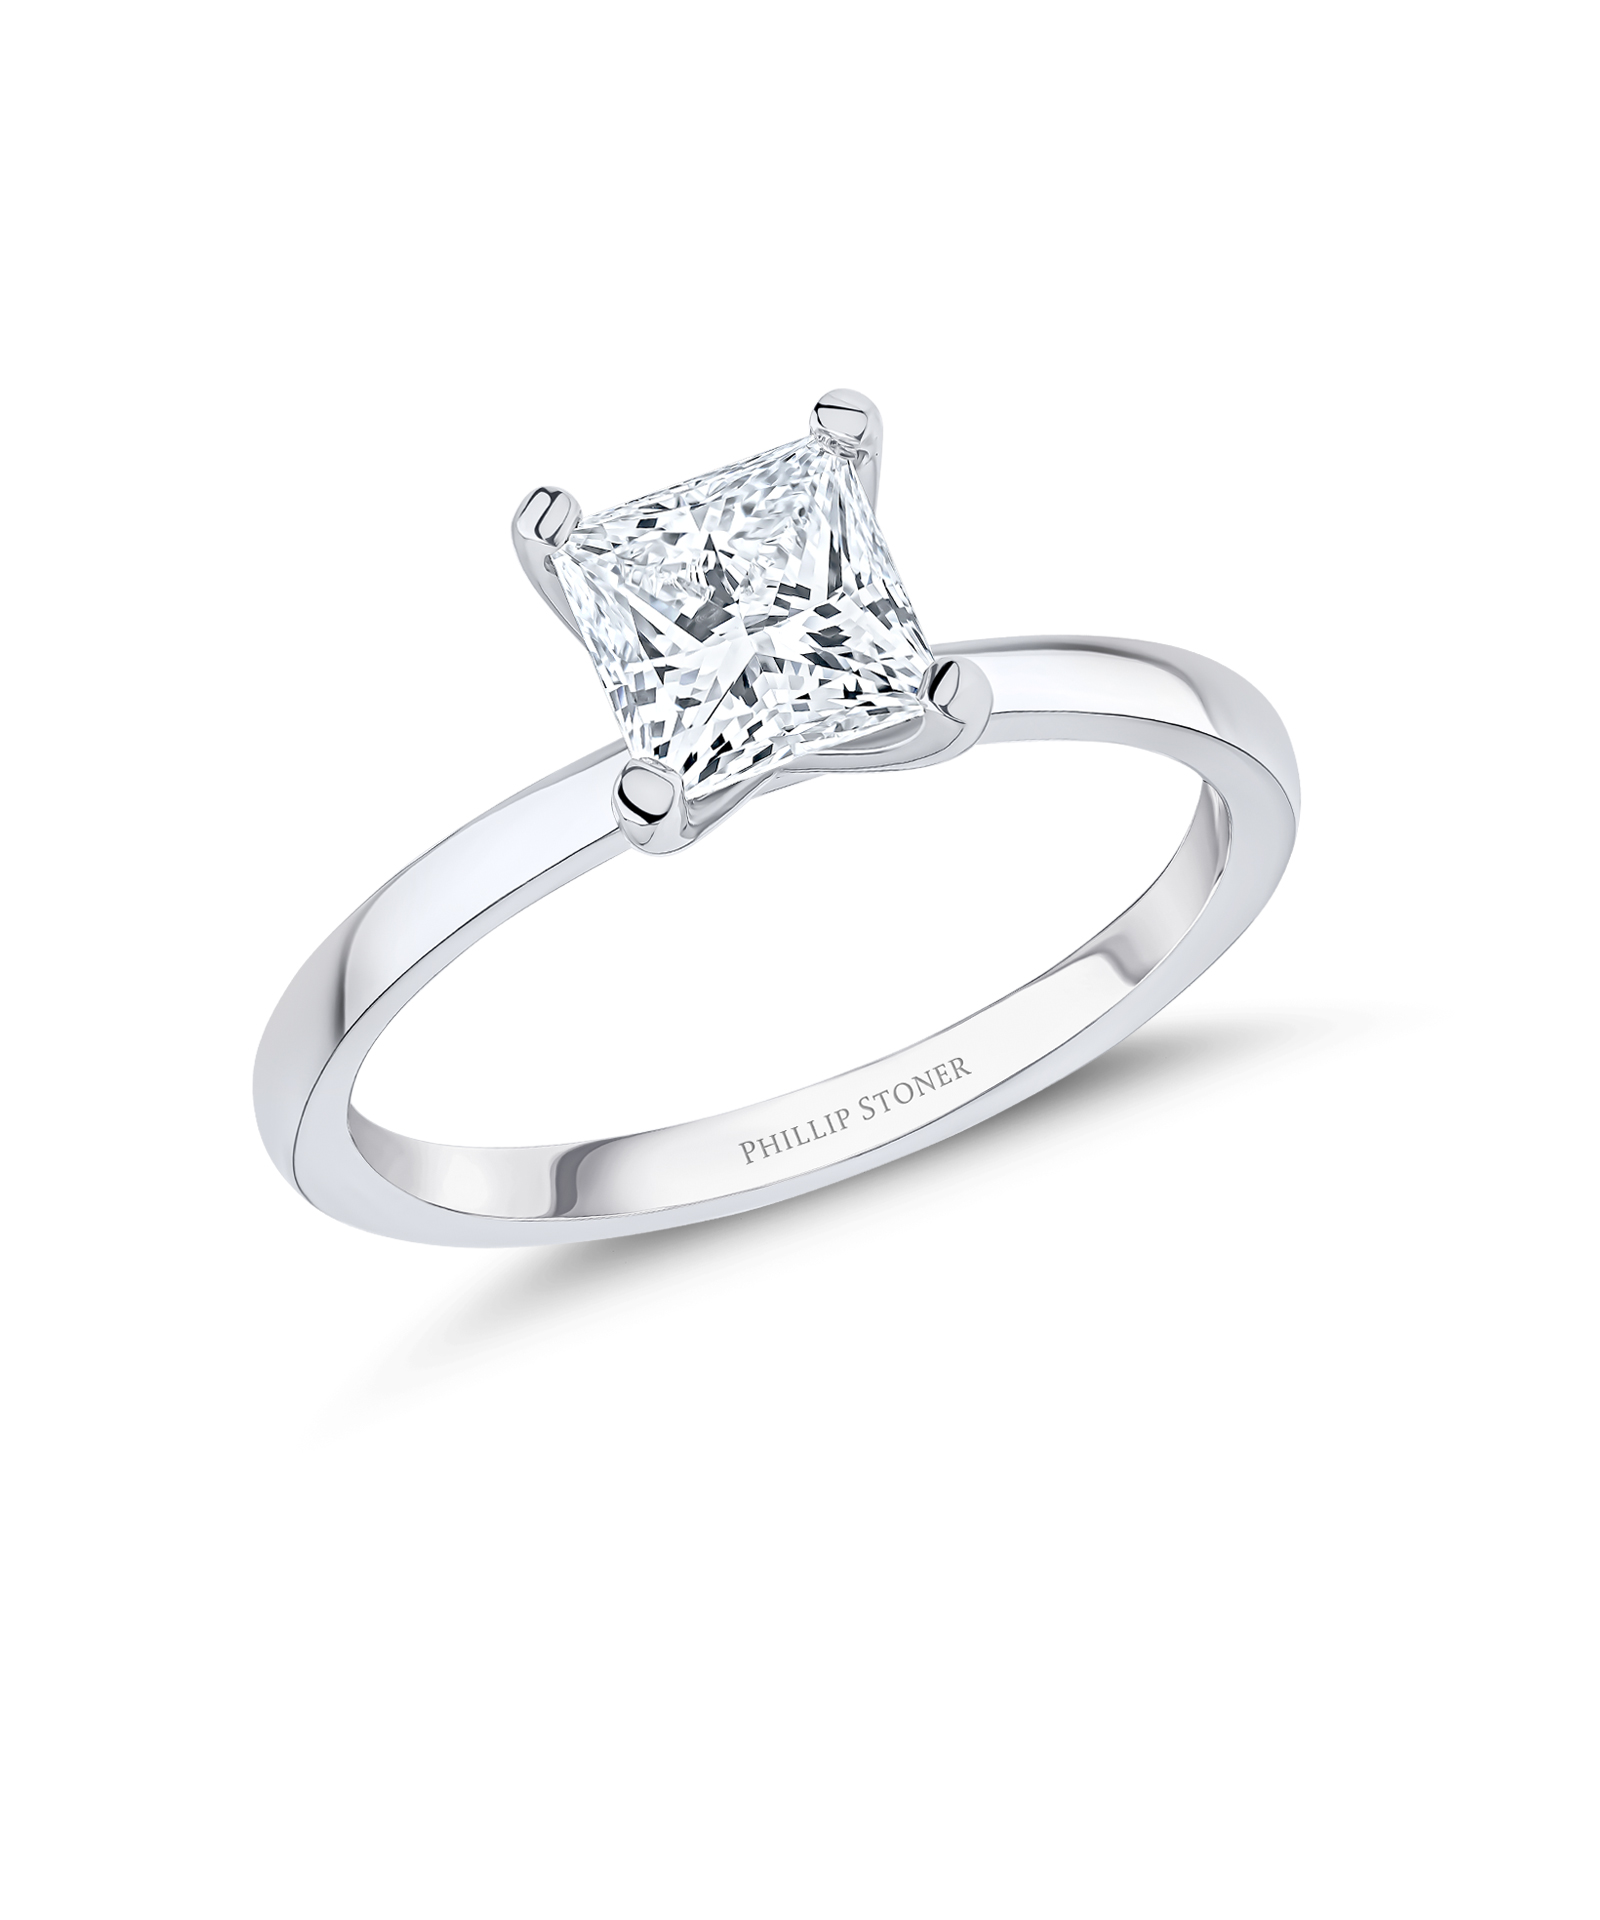 1ct Princess Cut Diamond Nova Platinum Engagement Ring - Phillip Stoner The Jeweller